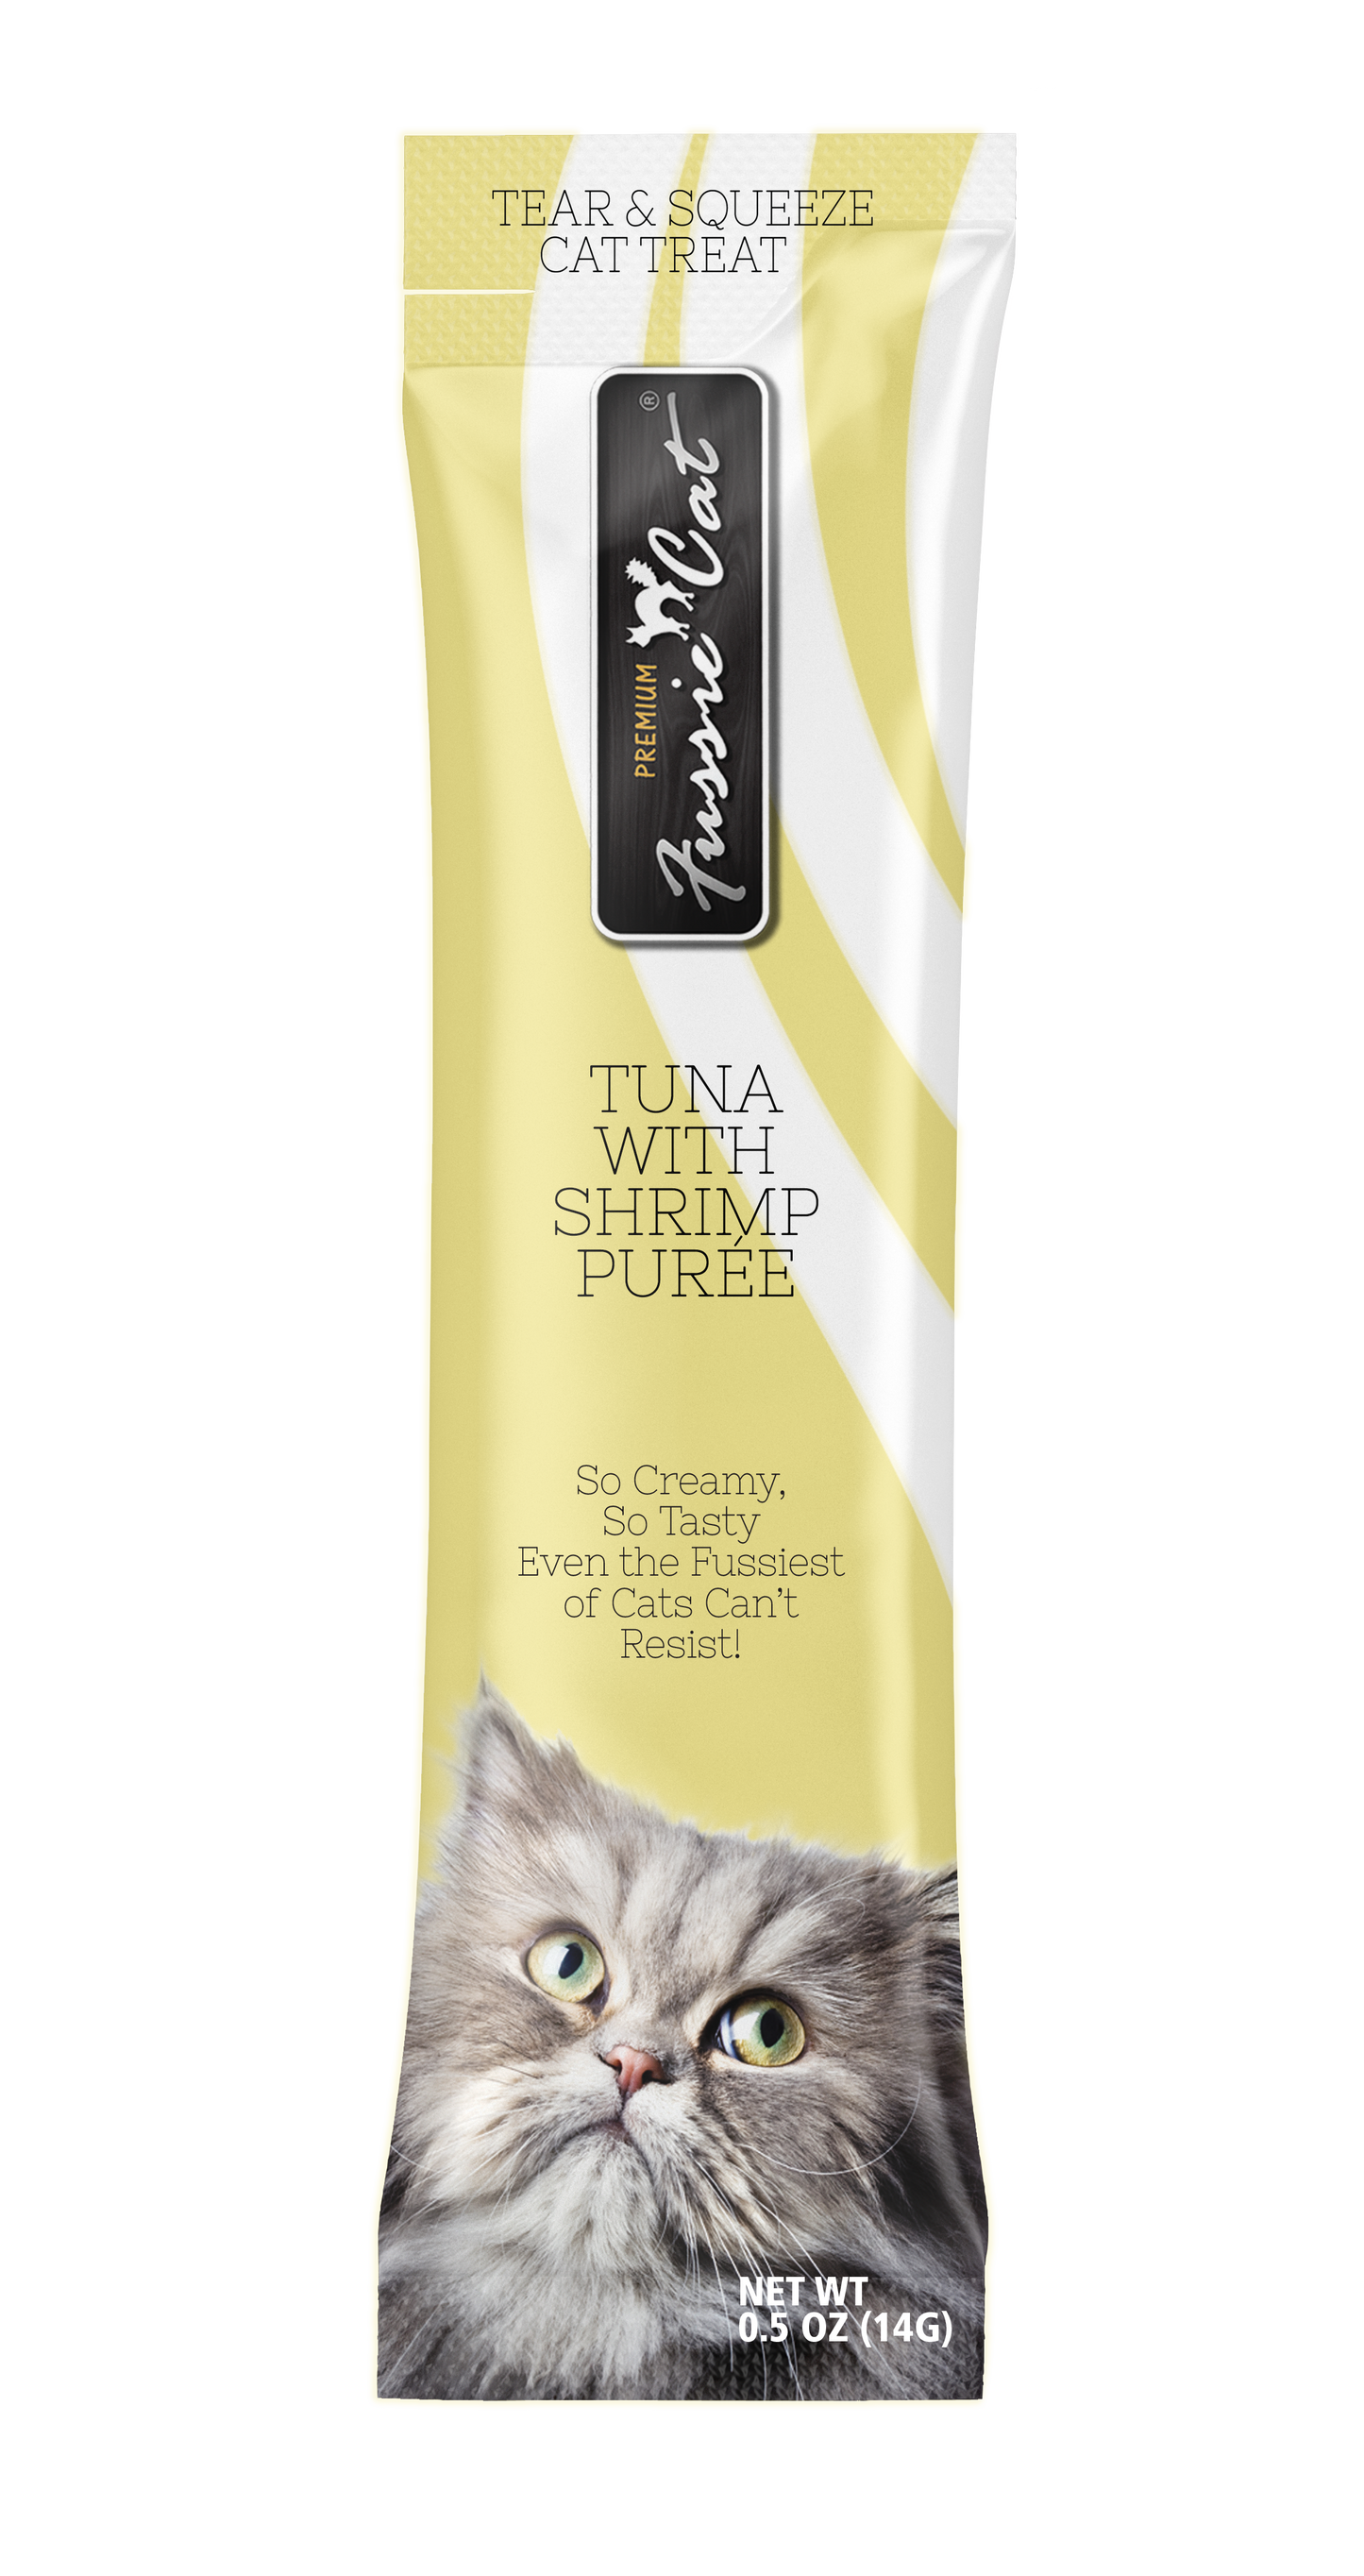 Fussie Cat Tuna With Shrimp Purée 0.5-oz, 4-Pack, Cat Treat